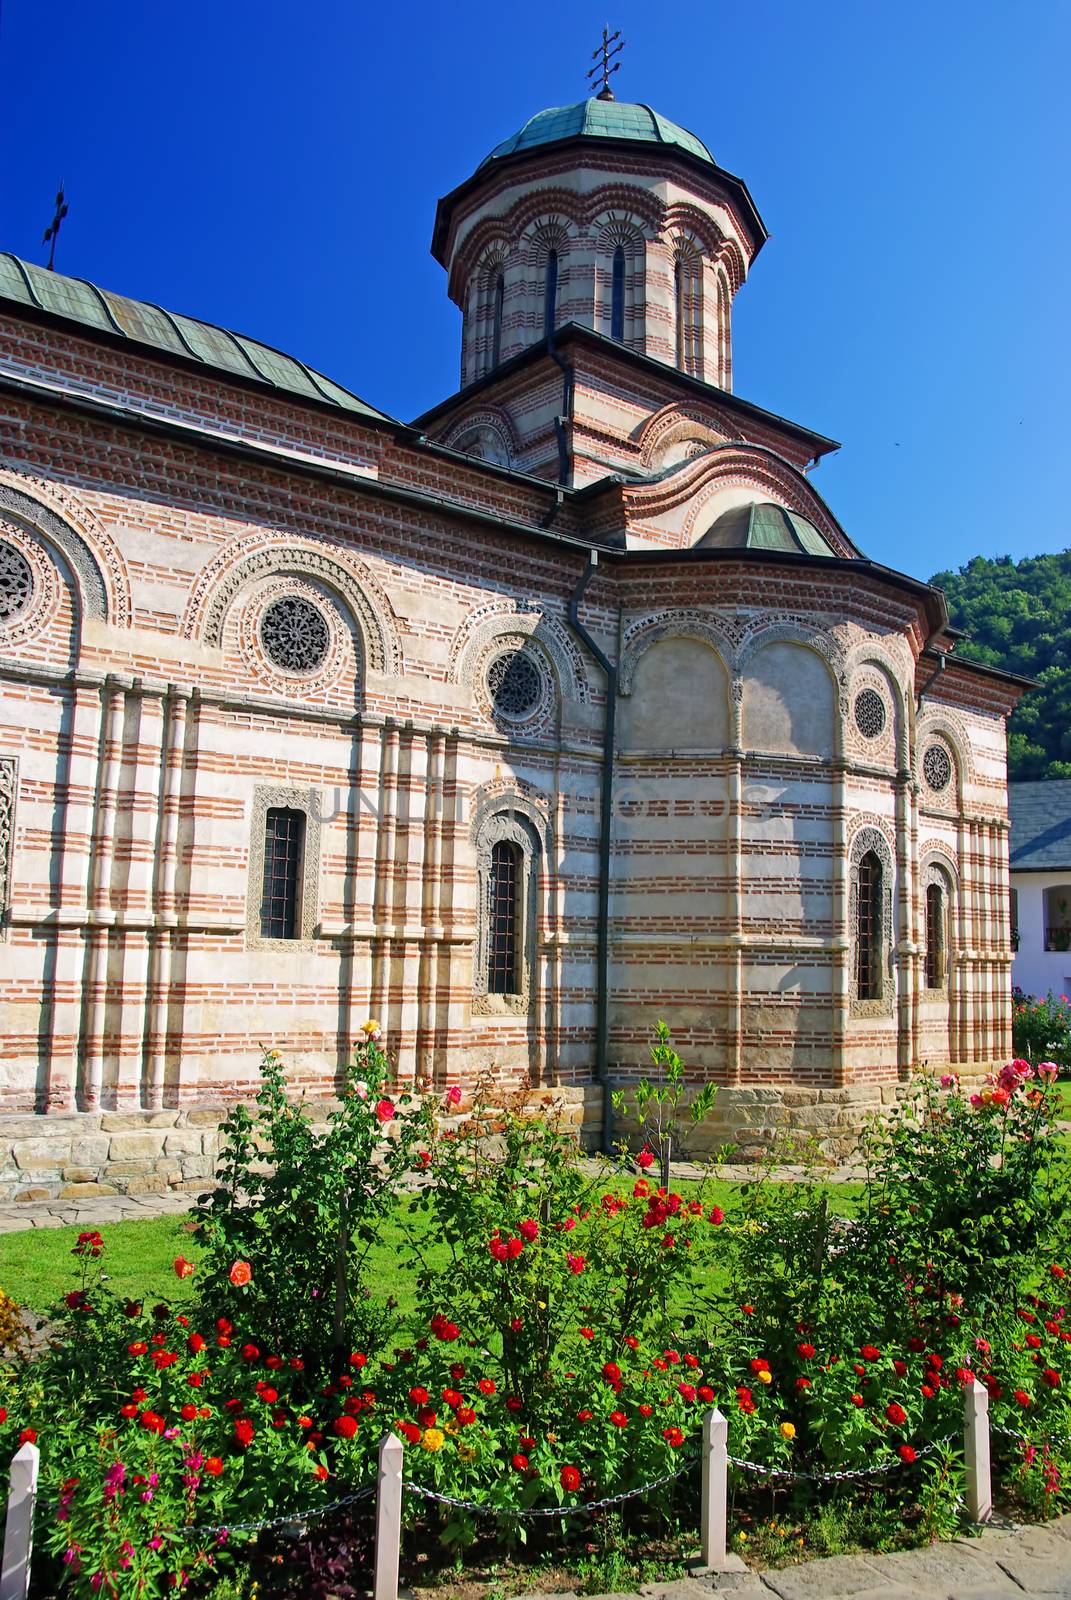 Cozia monastery orthodox church in Romania, medieval monument